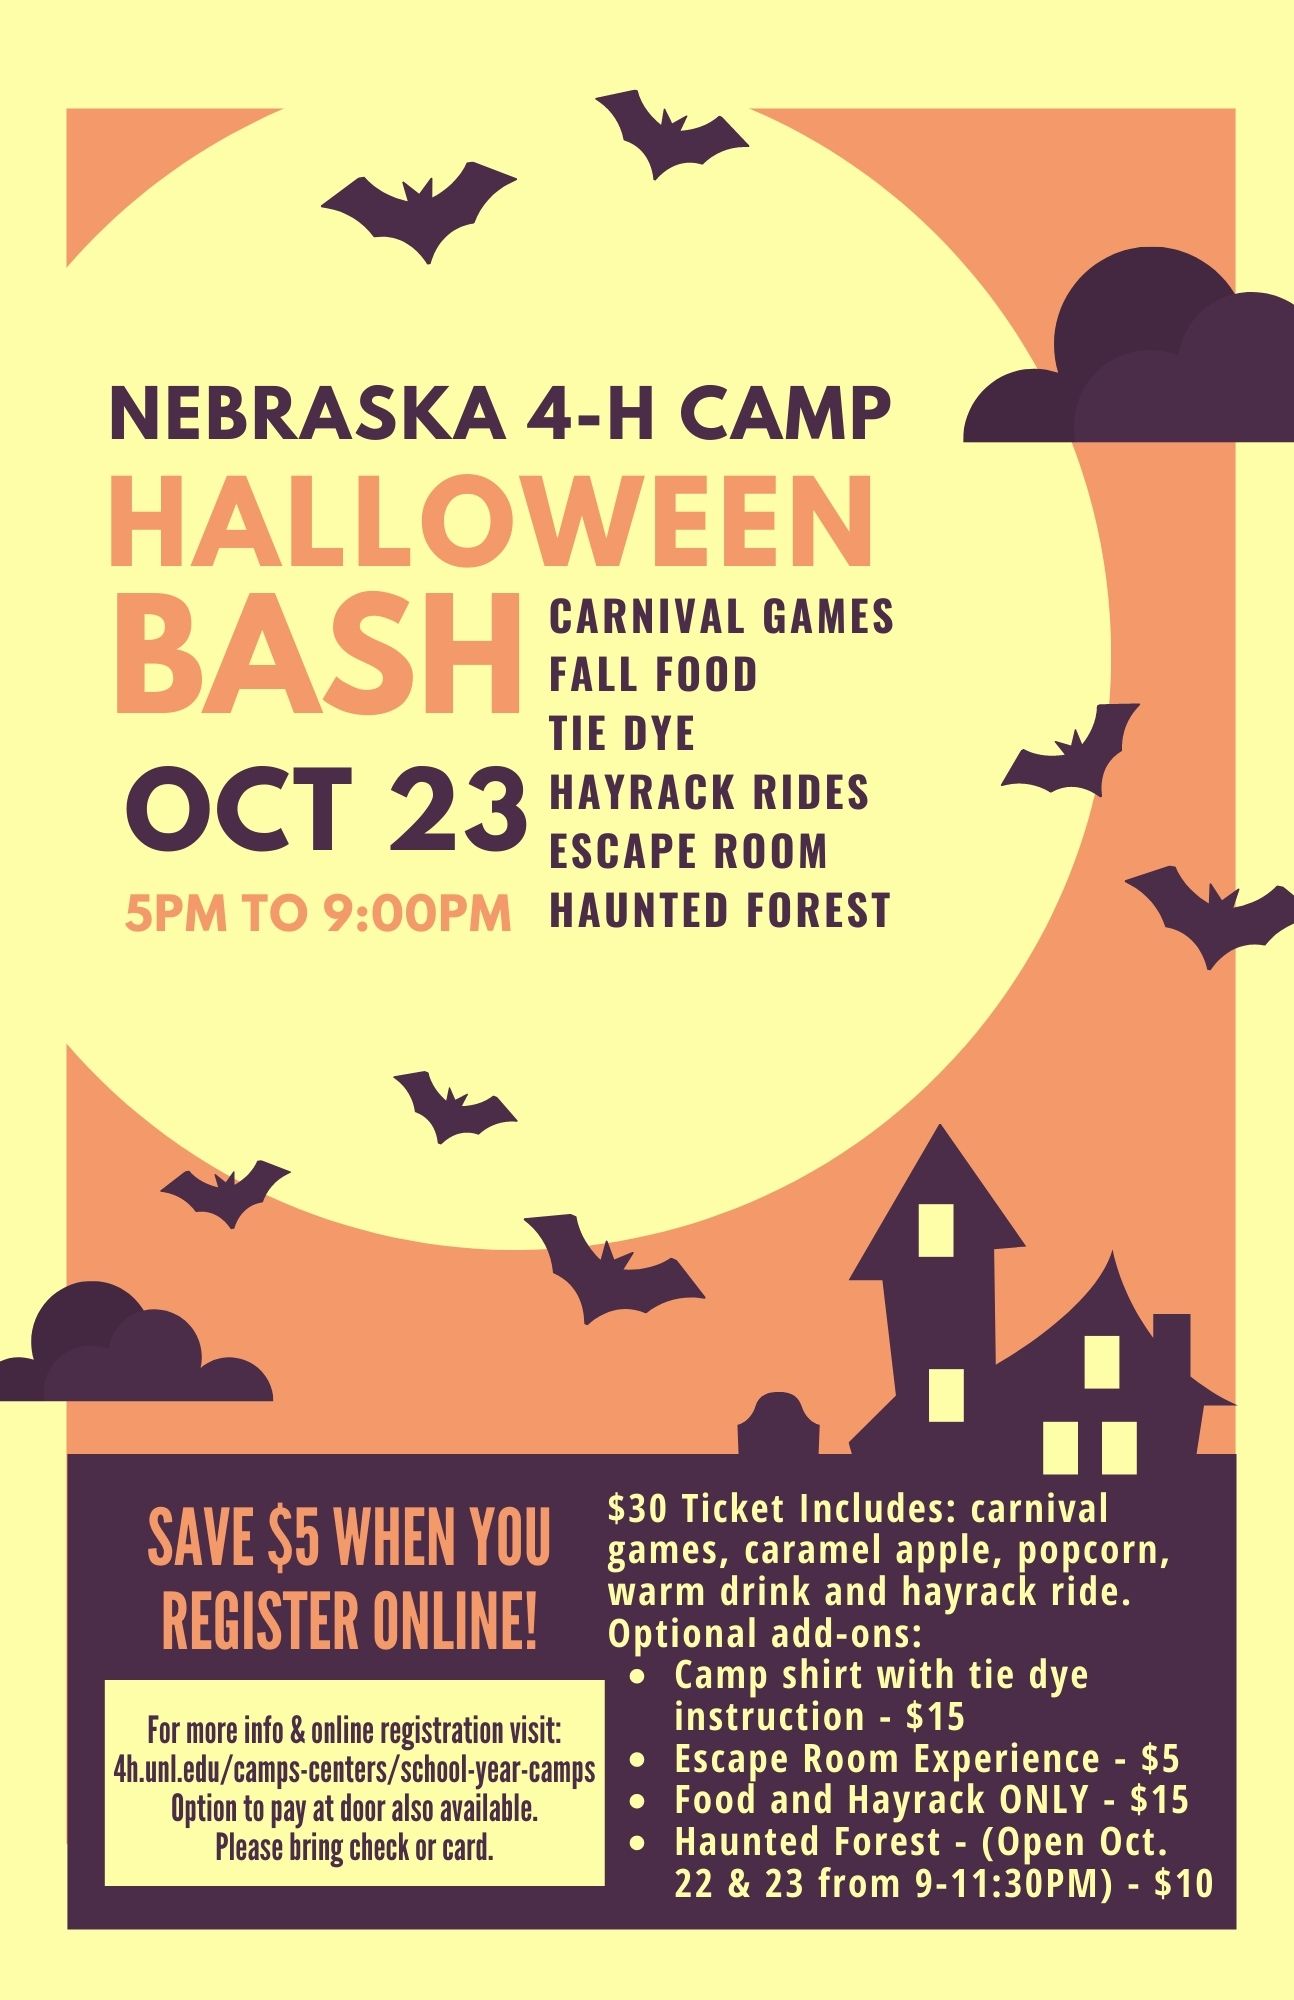 NE4H-Camp_Halloween-Bash-1_2021.jpg